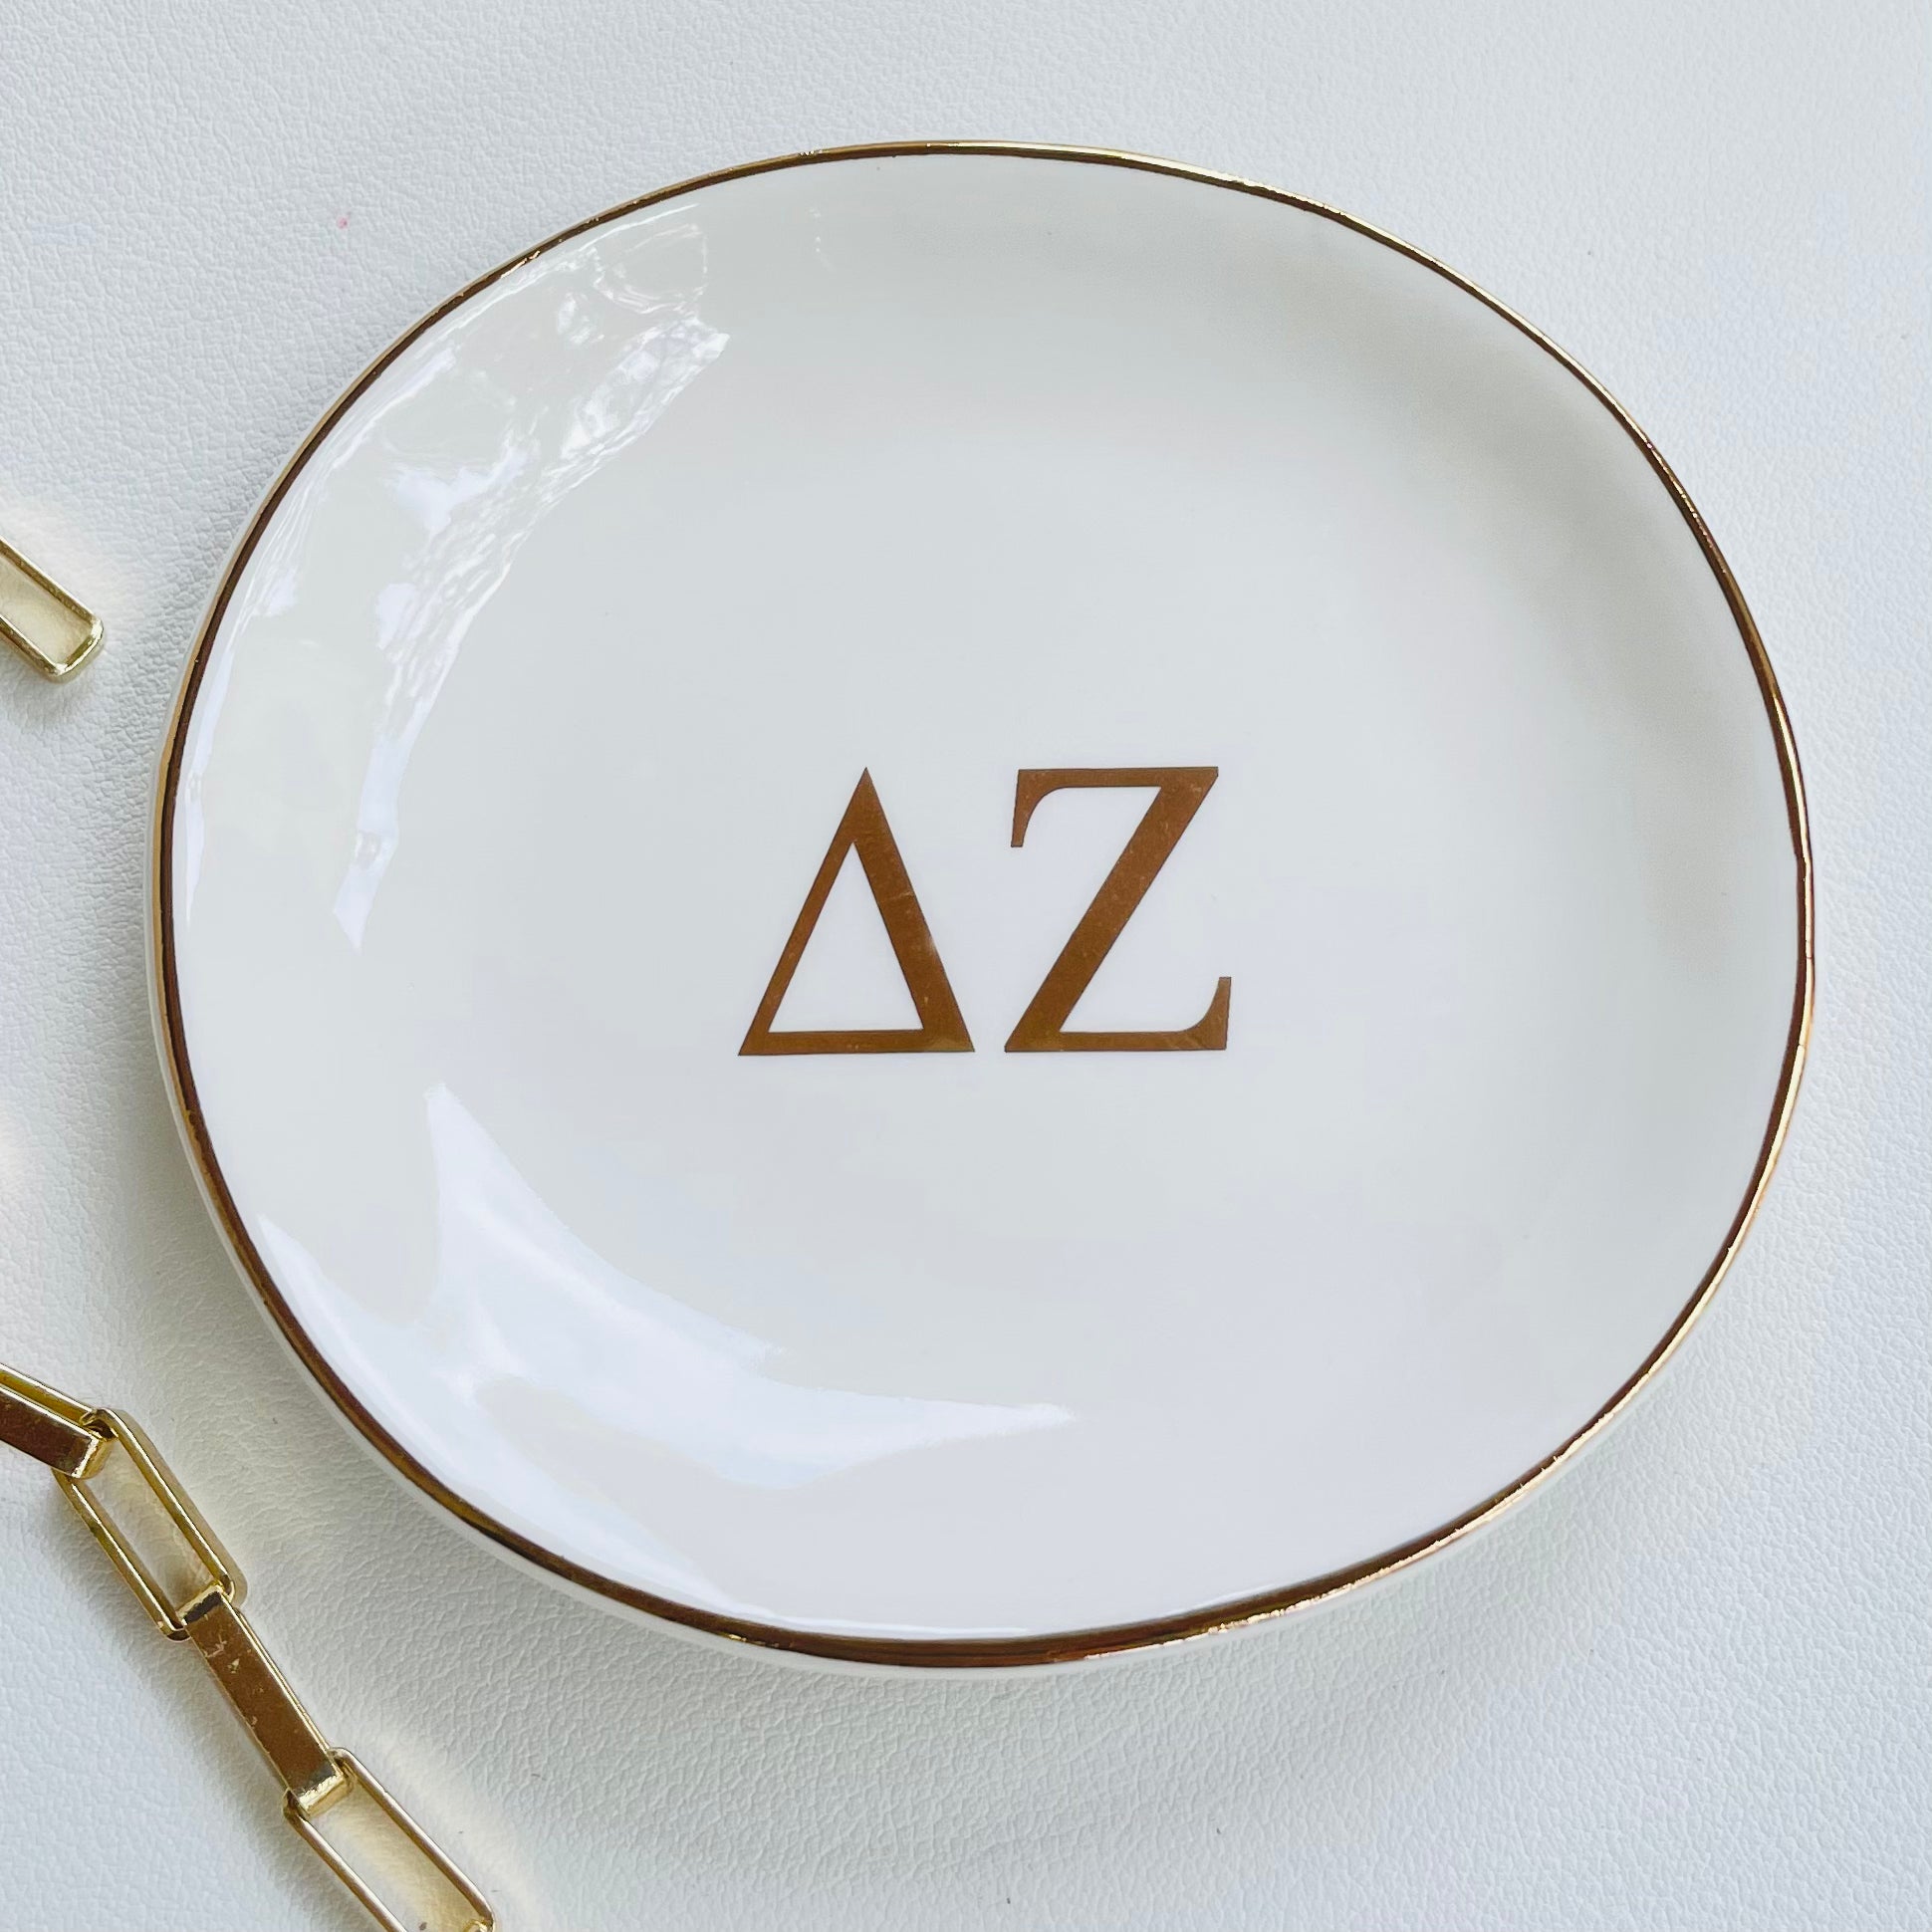 Delta Zeta Sorority Ring Dish with gold trim